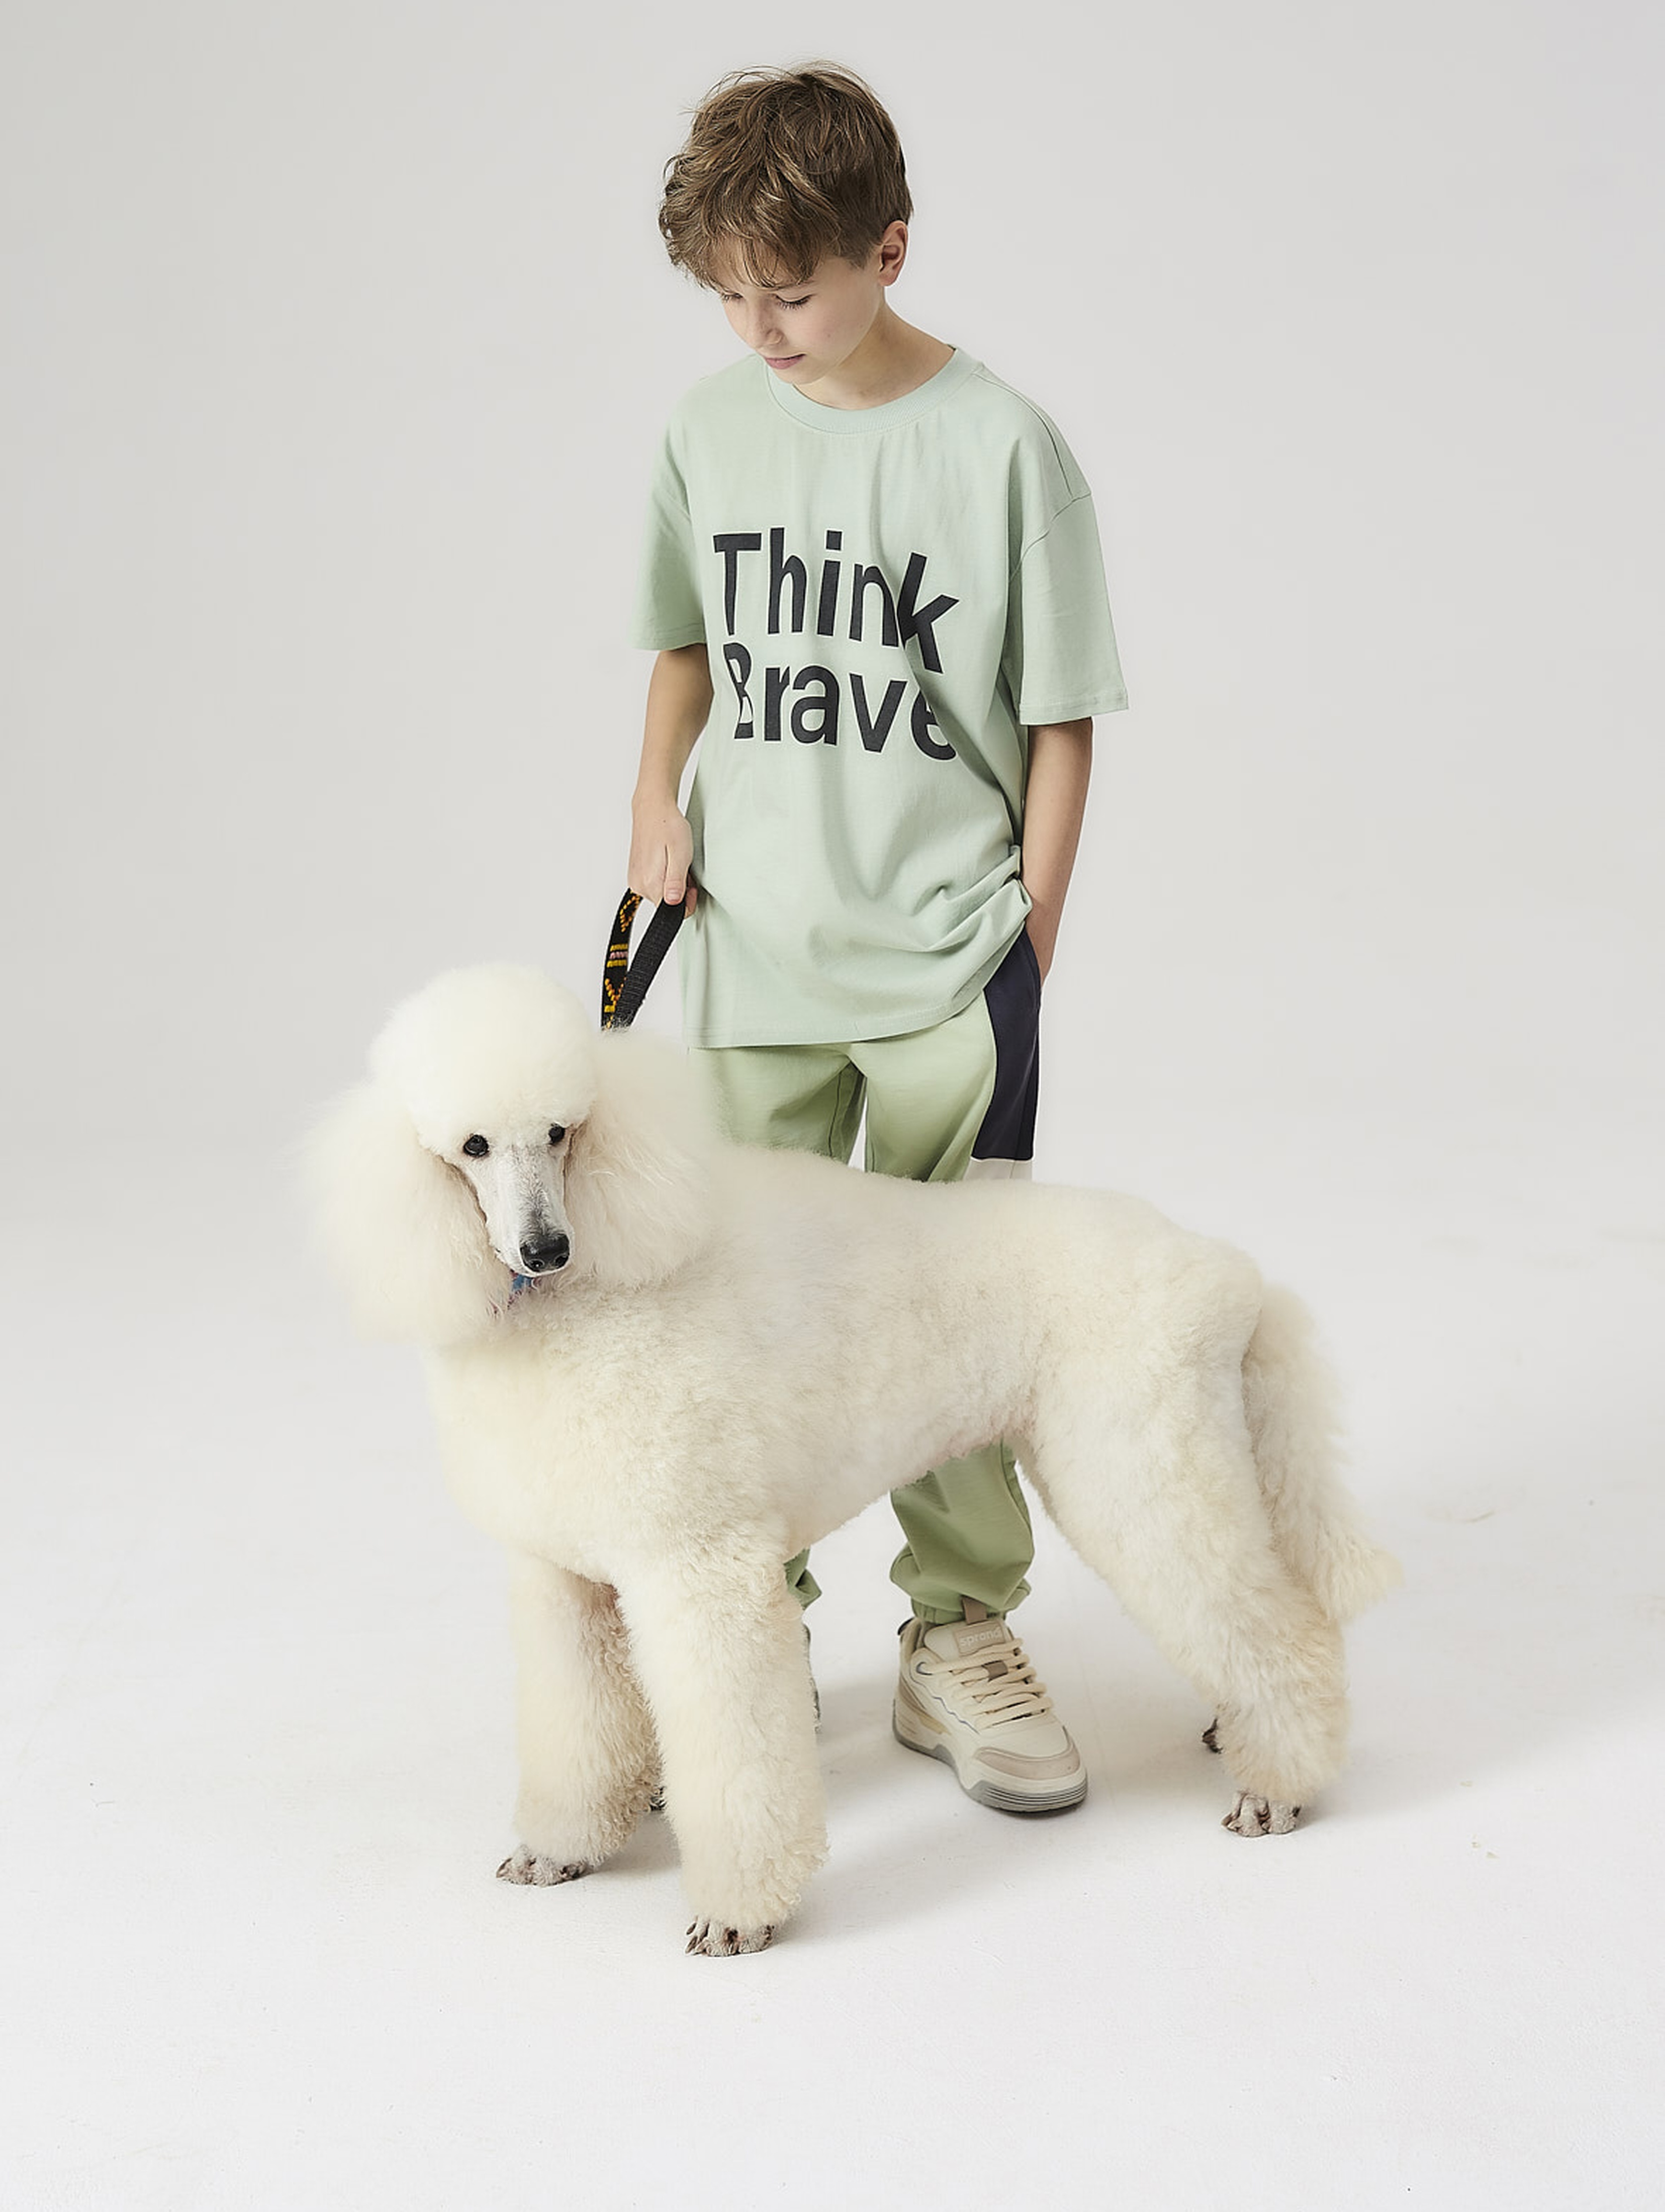 T-shirt dla chłopca - zielony Think Brave - Lincoln&Sharks